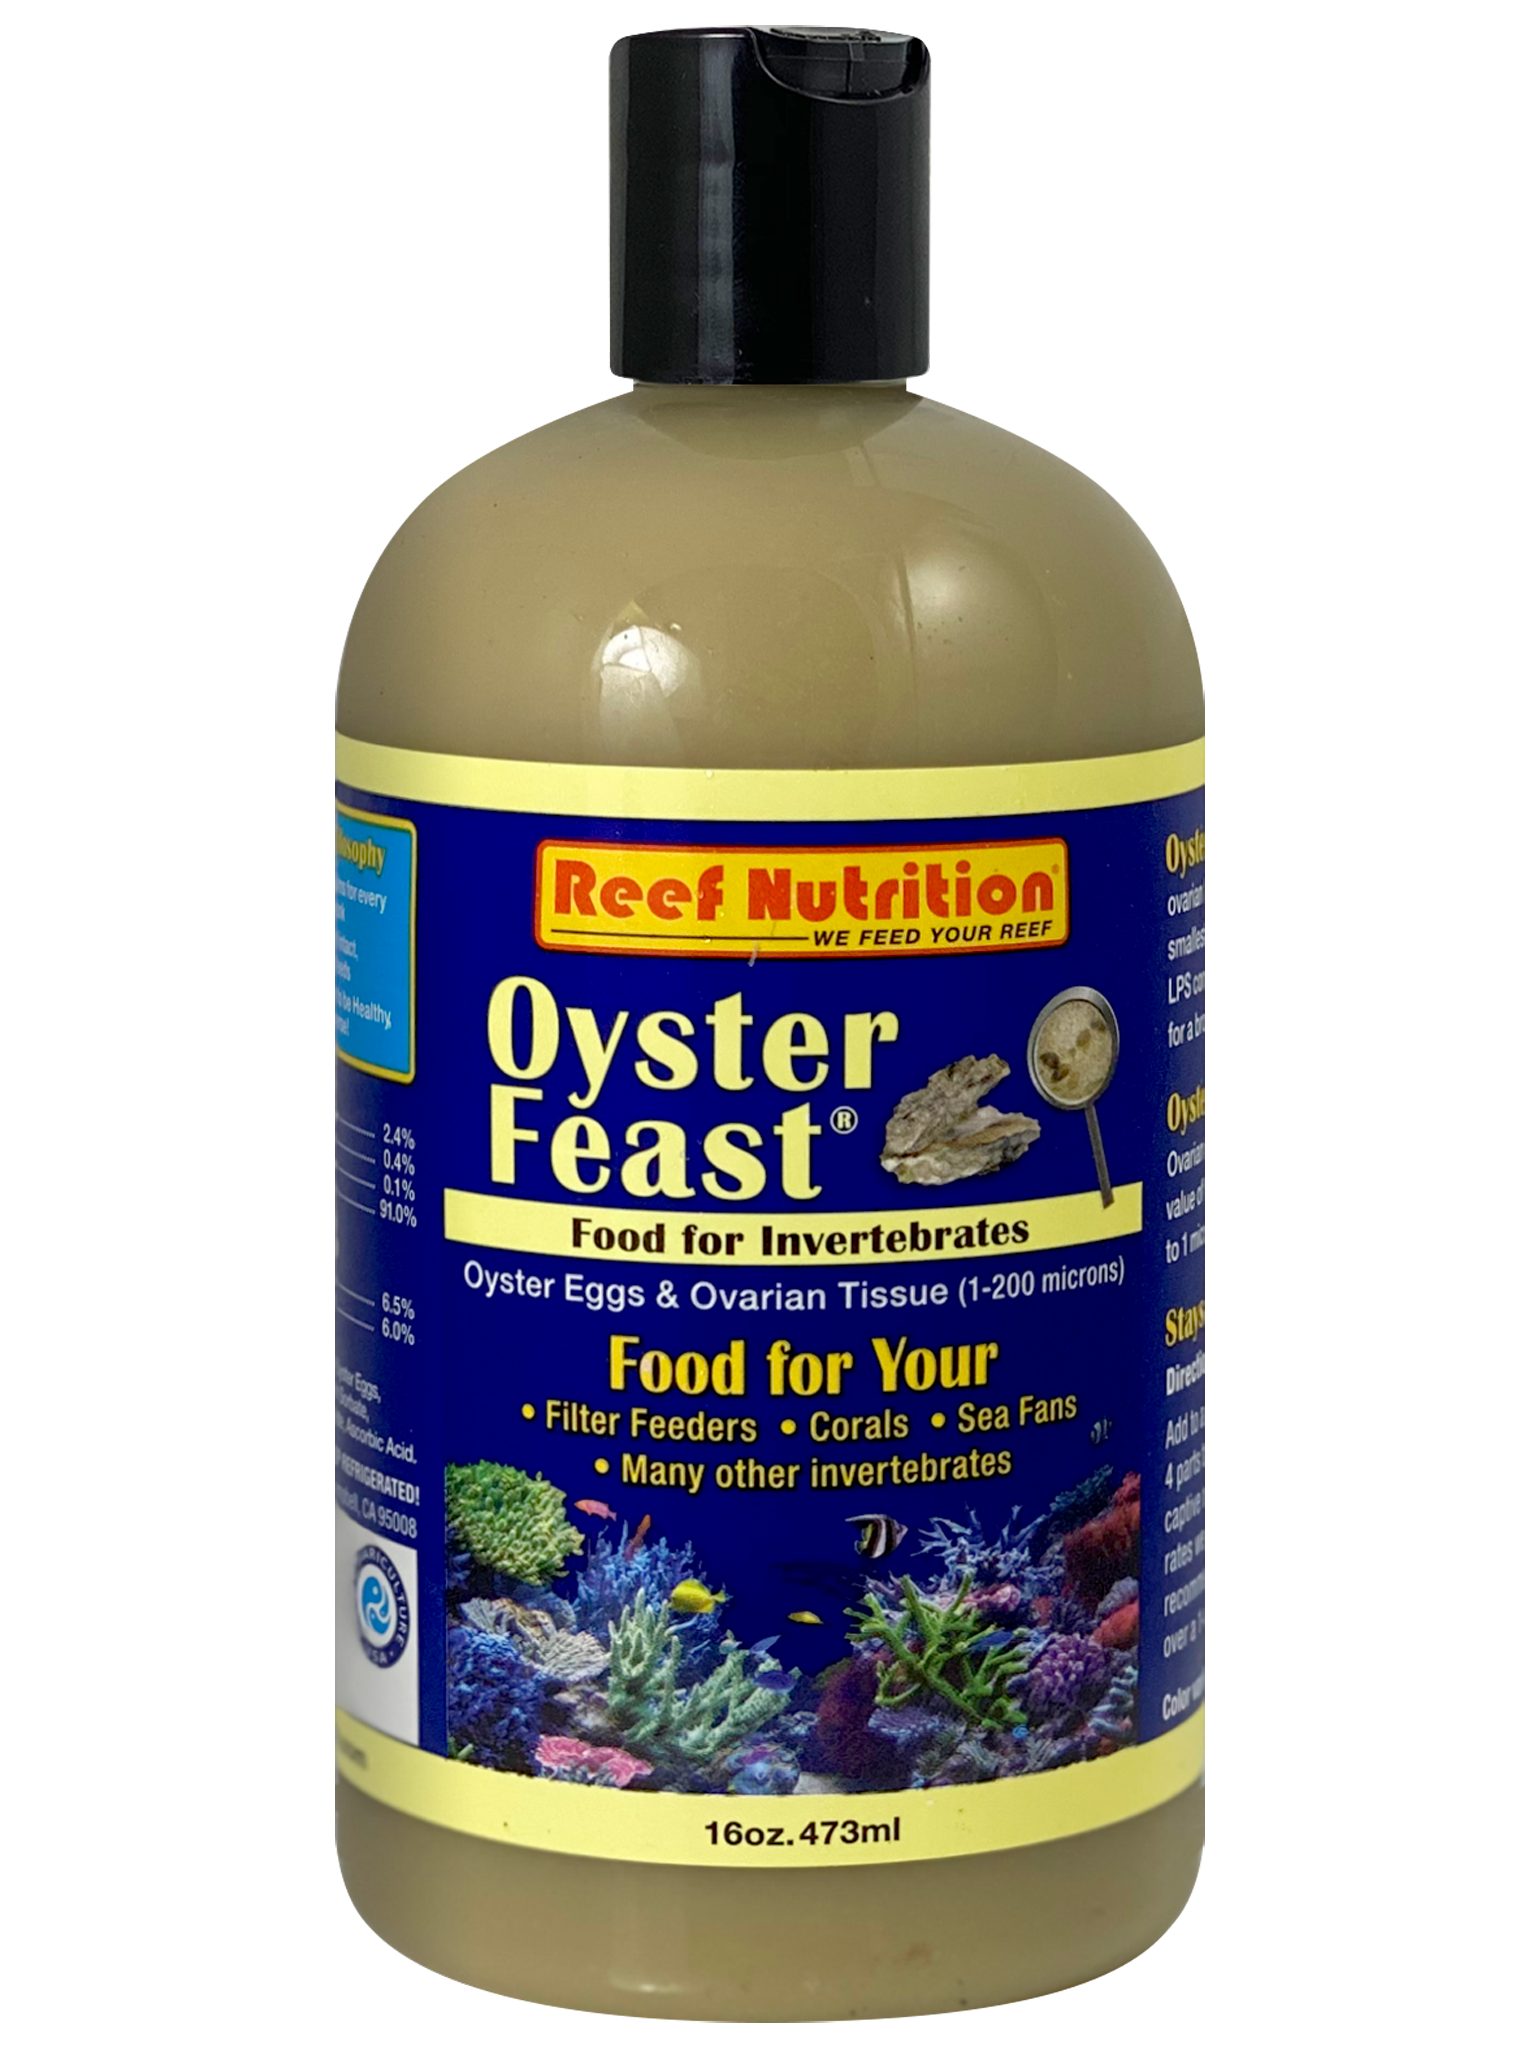 Reef Nutrition Oyster Feast - 16oz